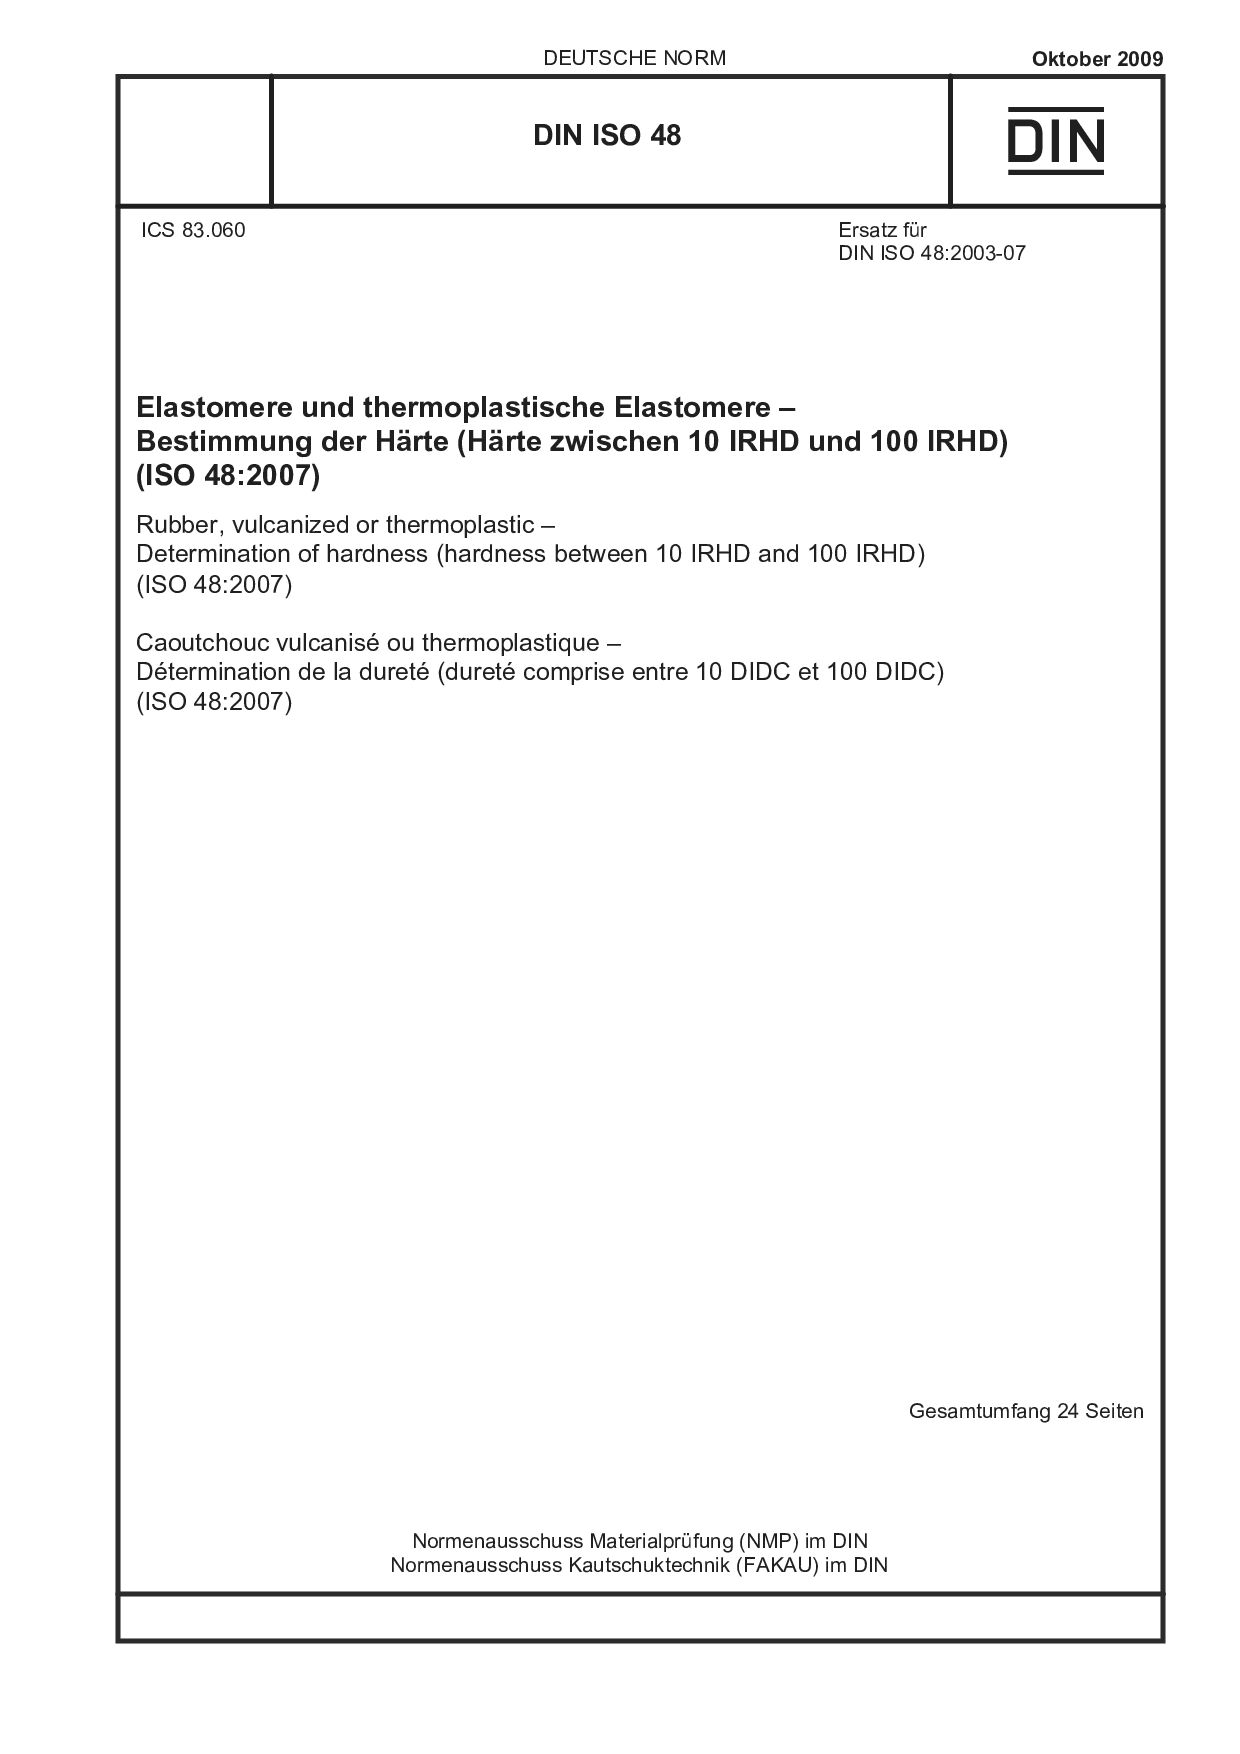 DIN ISO 48:2009